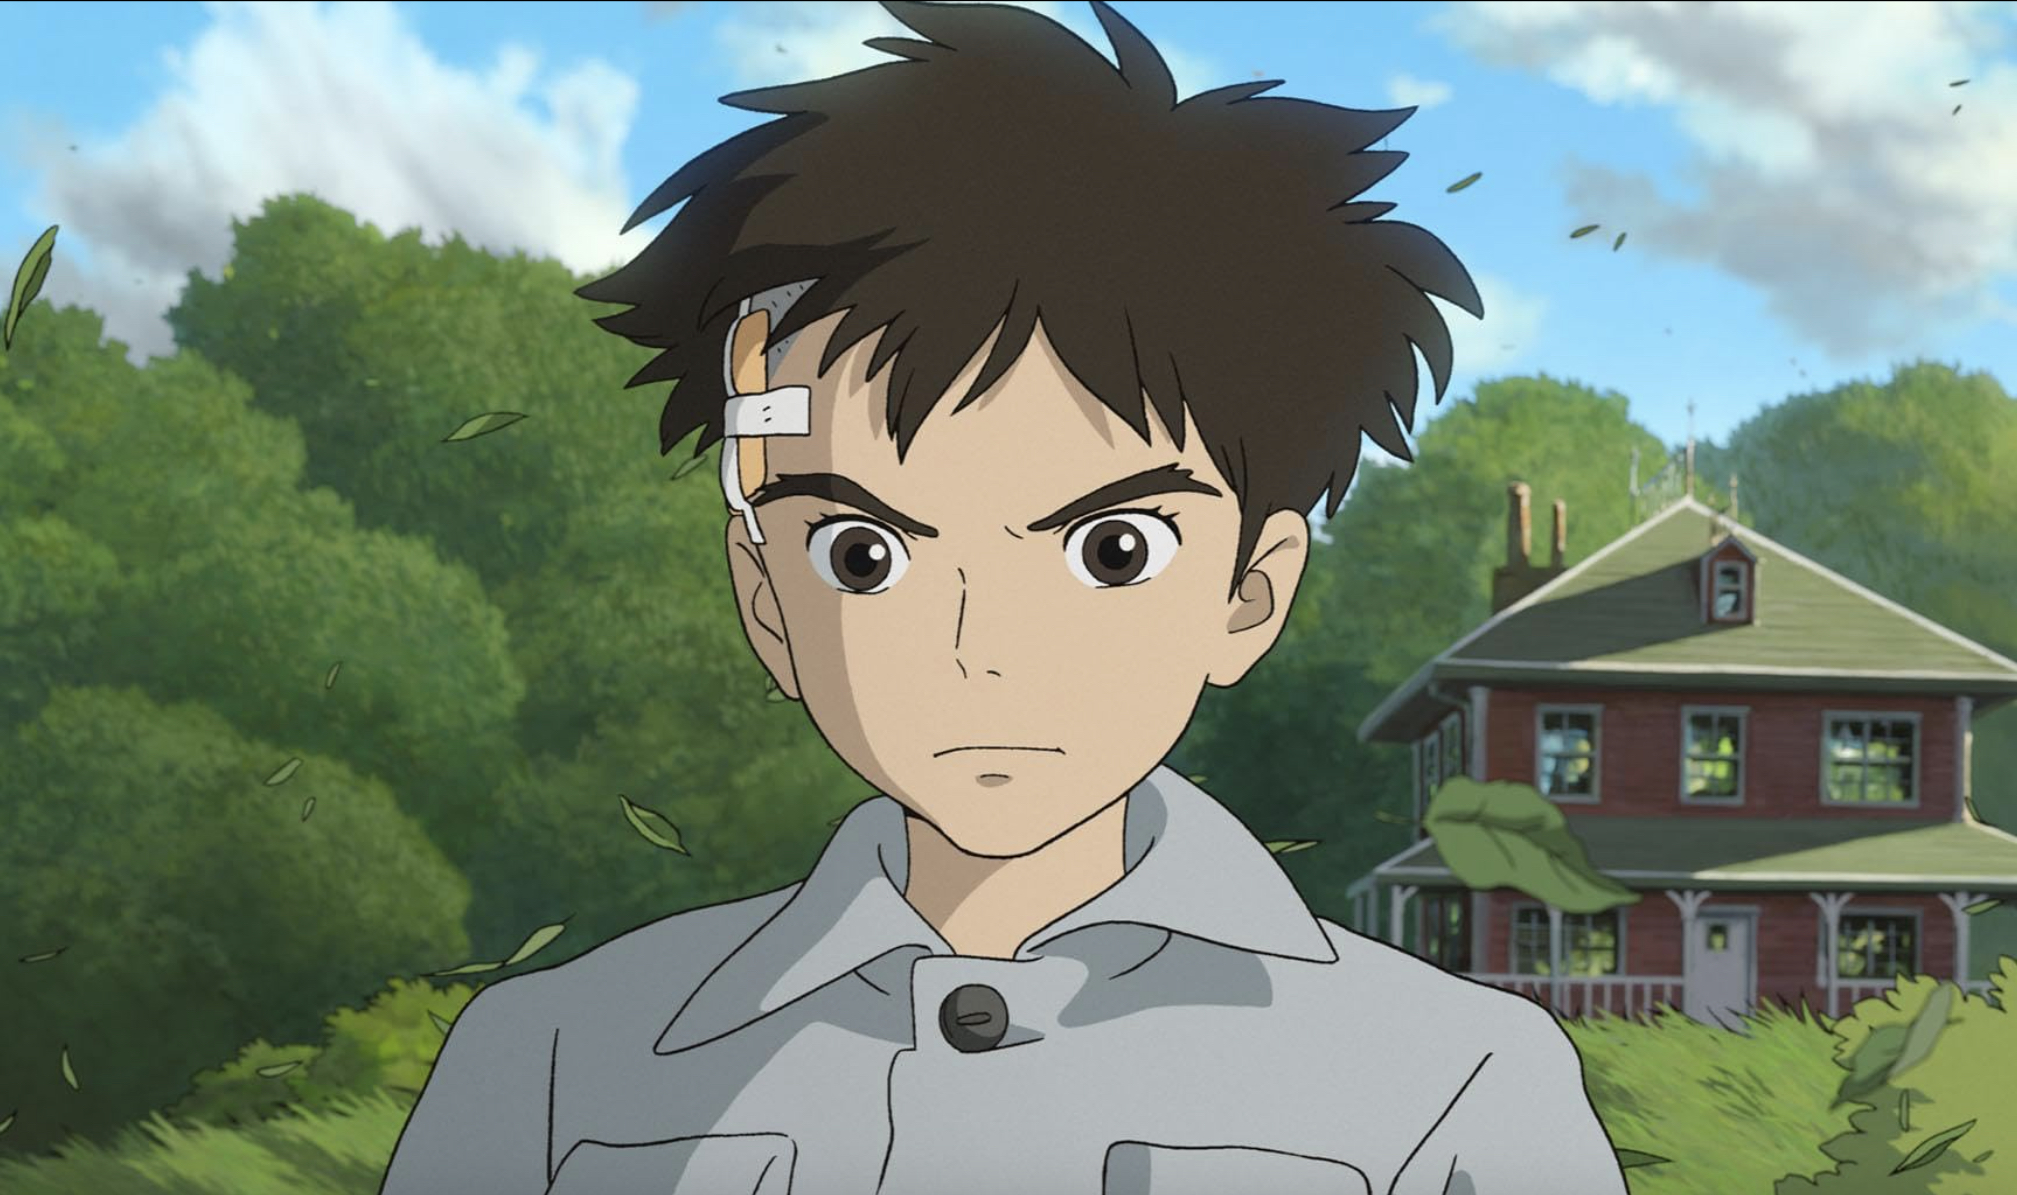 Mahito (voiced by Soma Santoki) in “The Boy and The Heron”